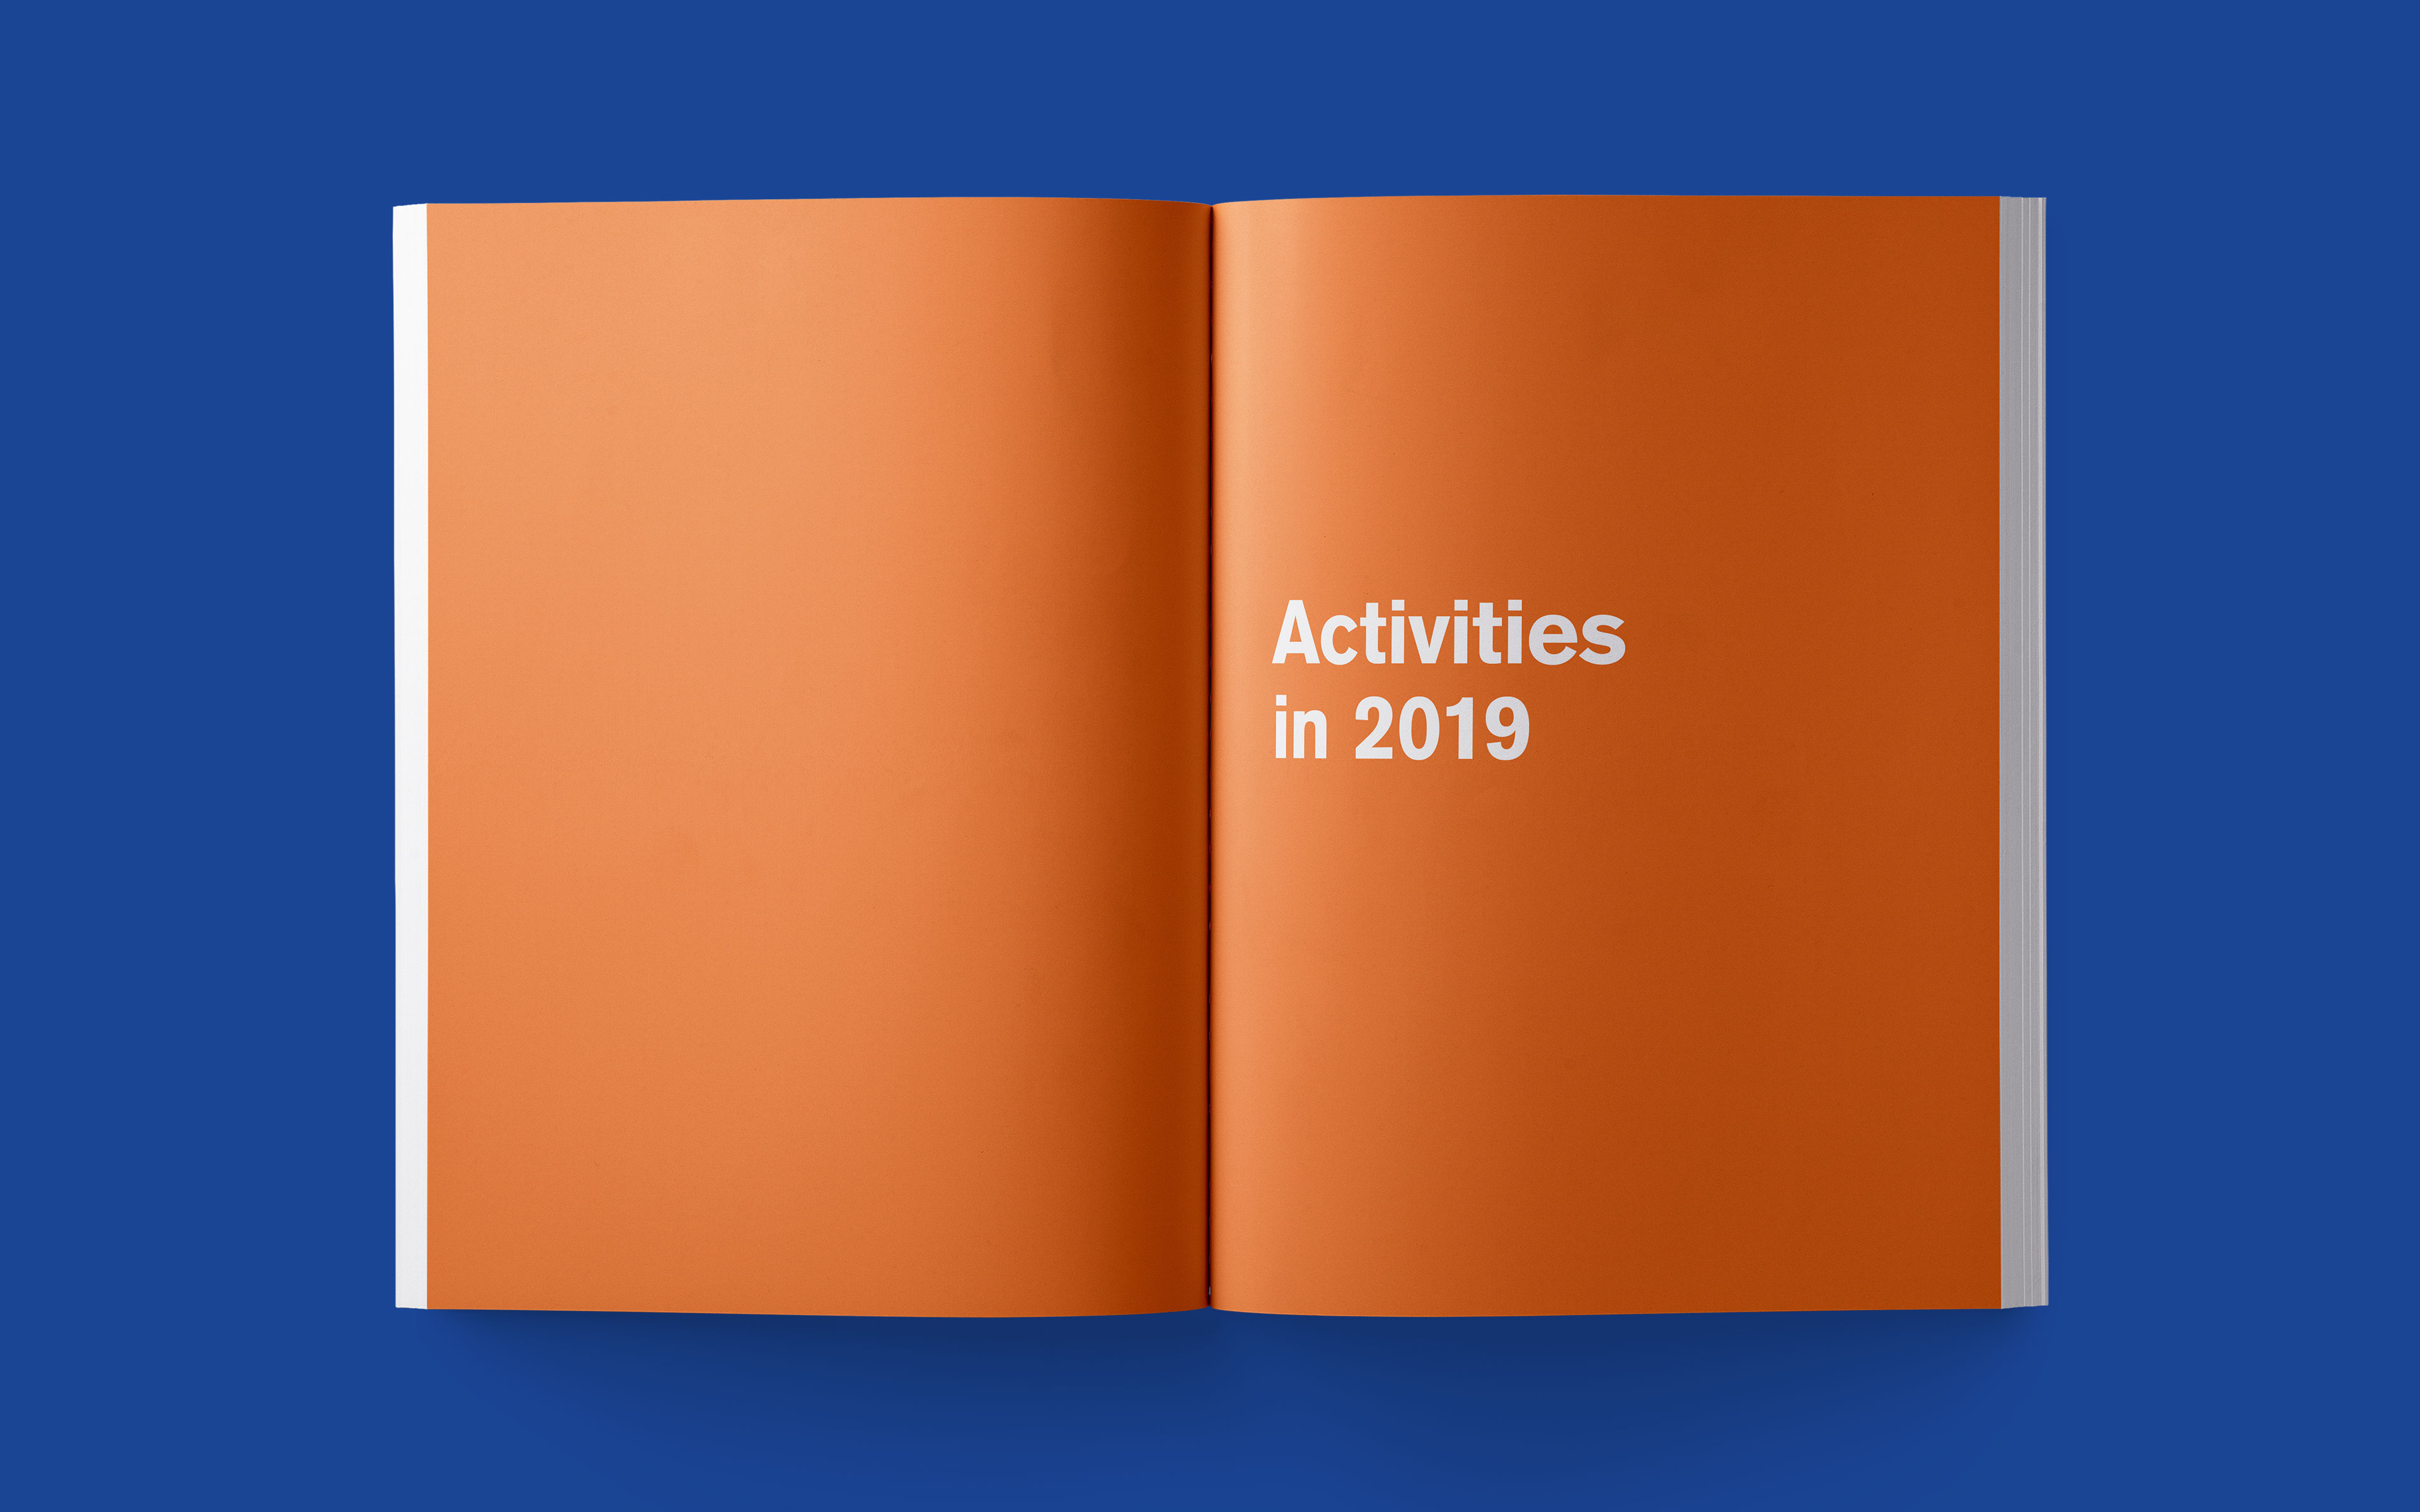 Halkbank Annual Report 2019